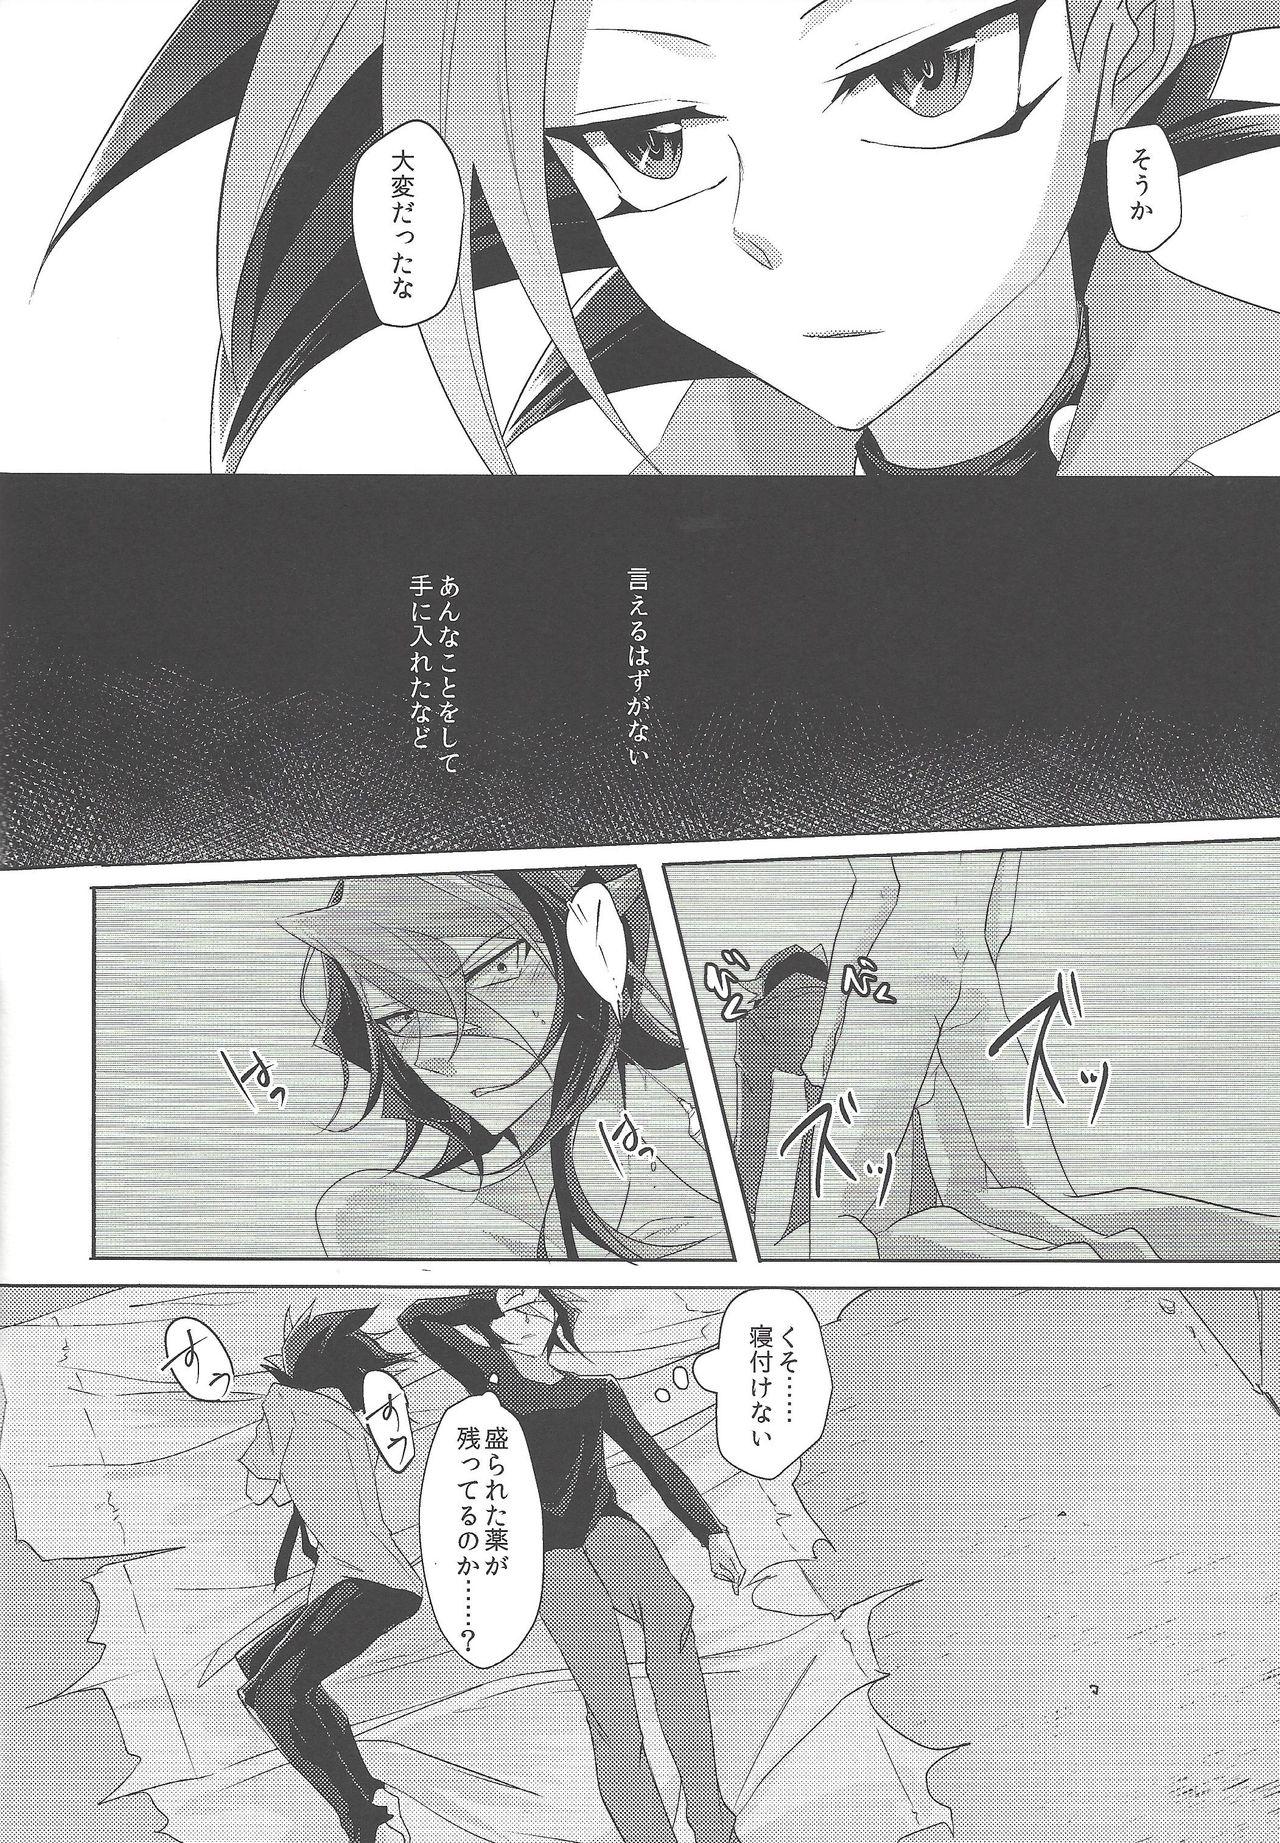 Negra Kimi to kokoro no risōkyō - Yu-gi-oh arc-v Flogging - Page 7